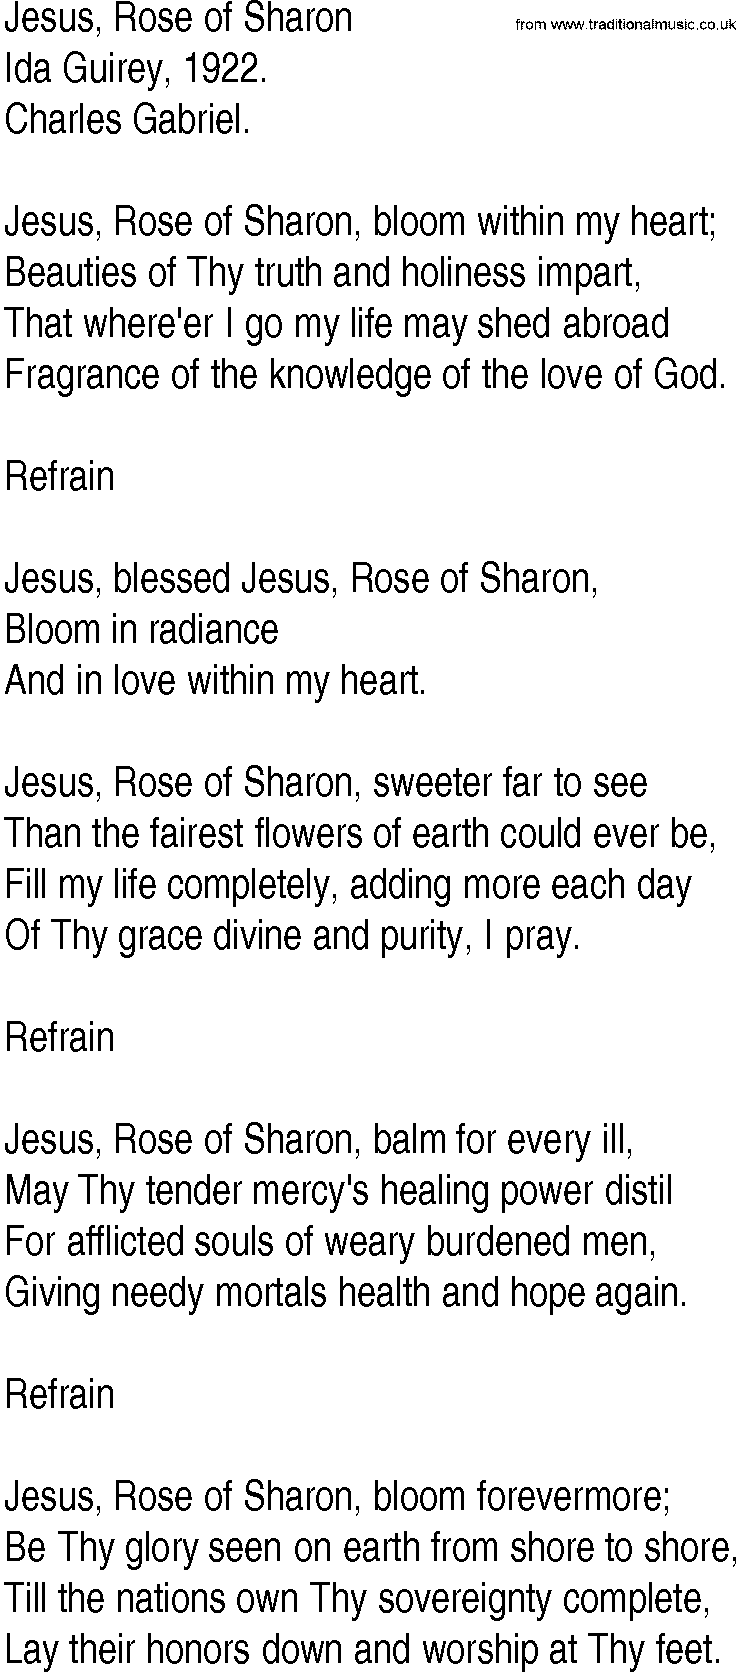 Hymn and Gospel Song: Jesus, Rose of Sharon by Ida Guirey lyrics